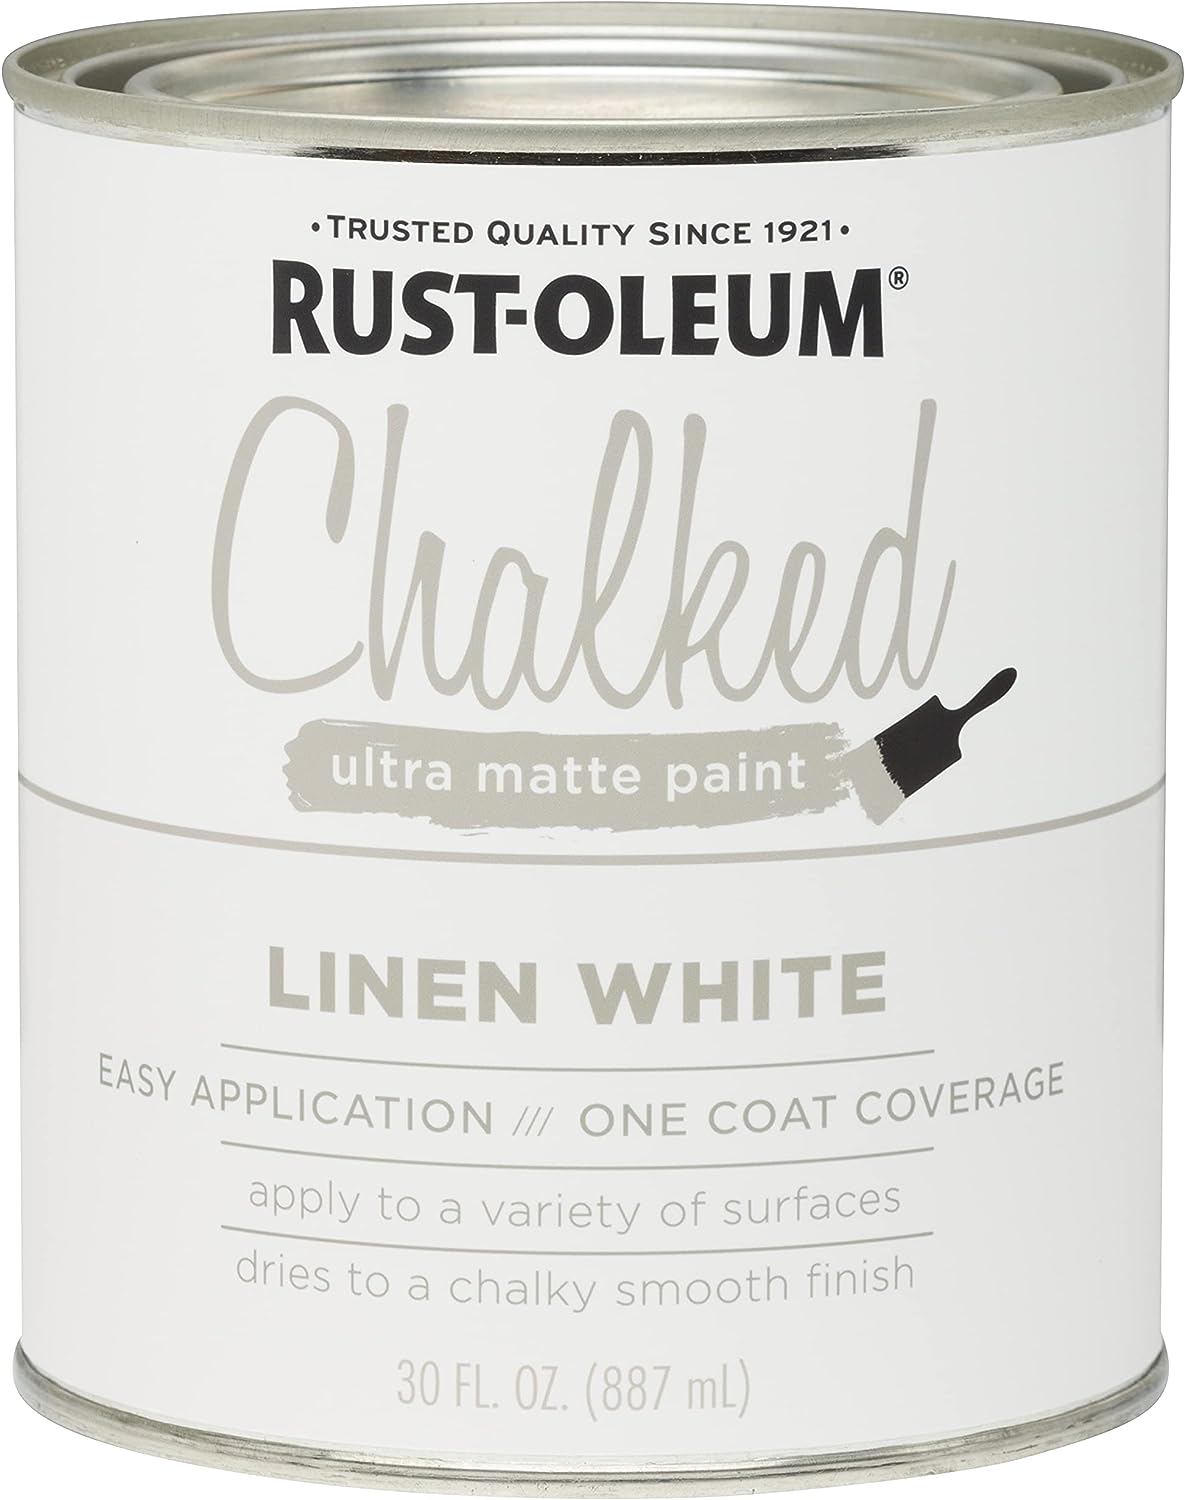 Rust-Oleum 285140 Ultra Matte Interior Chalked Acrylic [...]